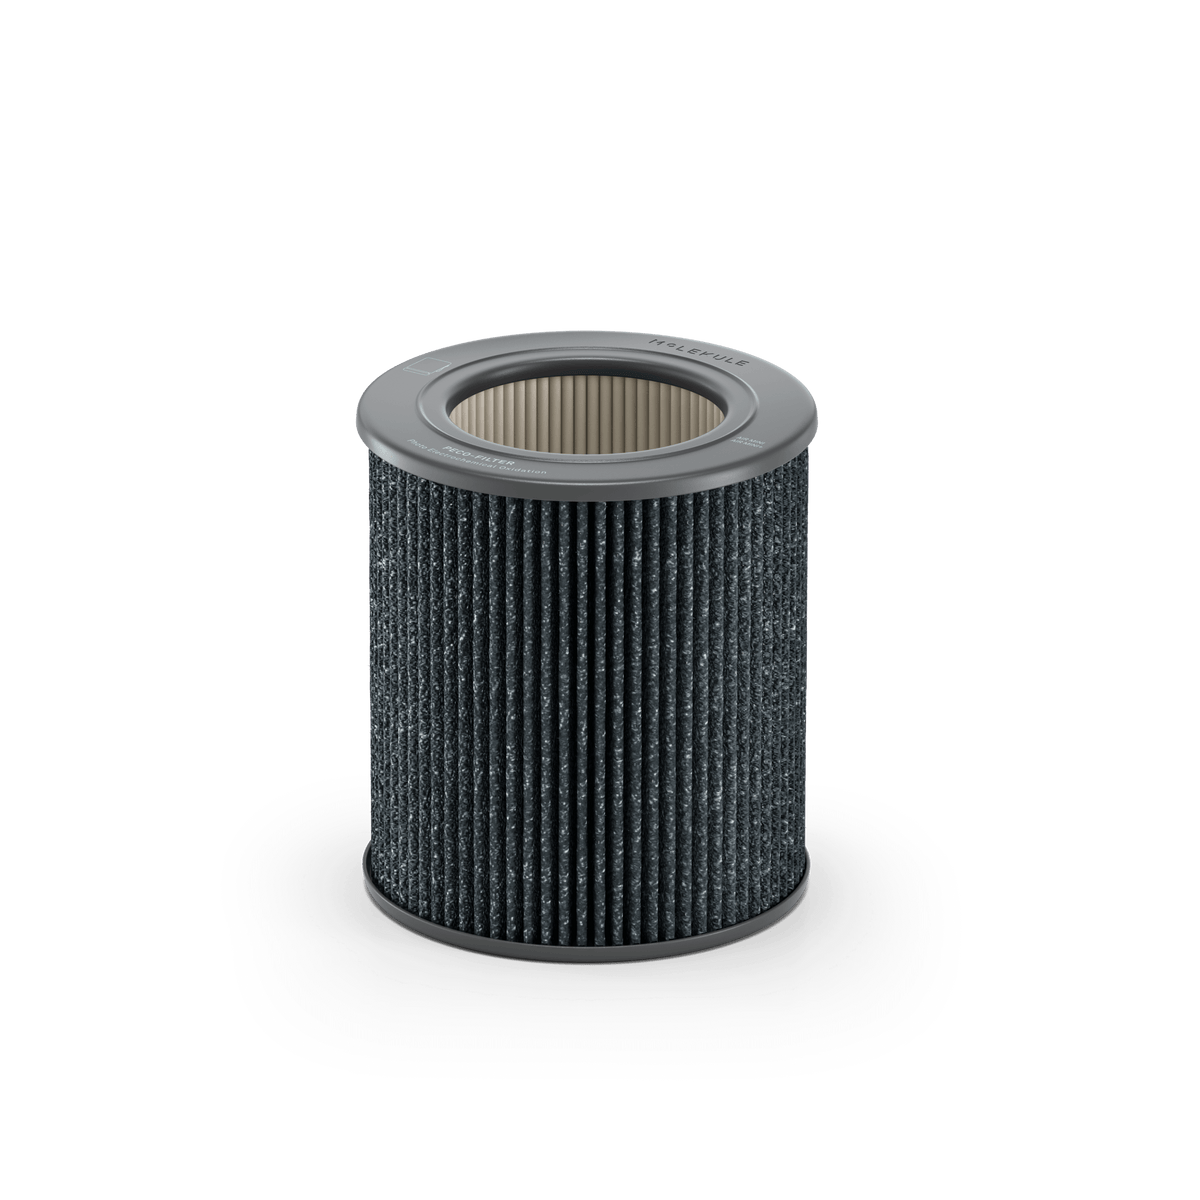 Air Mini+ and Air Mini replacement filter